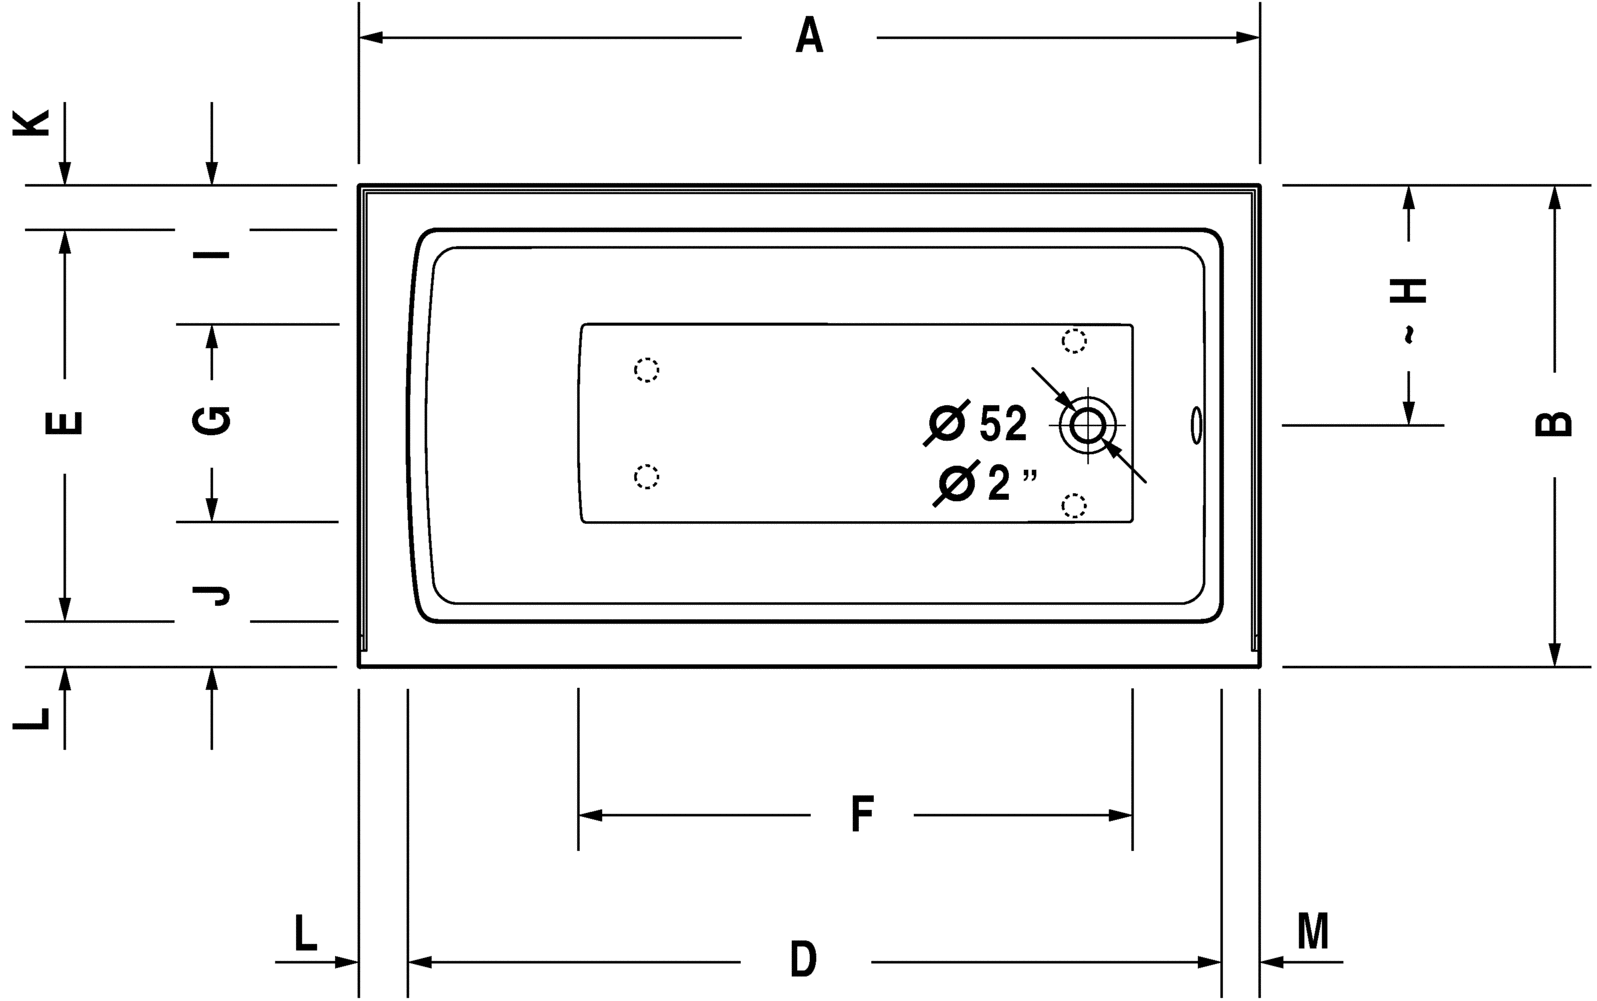 Bathtub with panel height 19 1/4